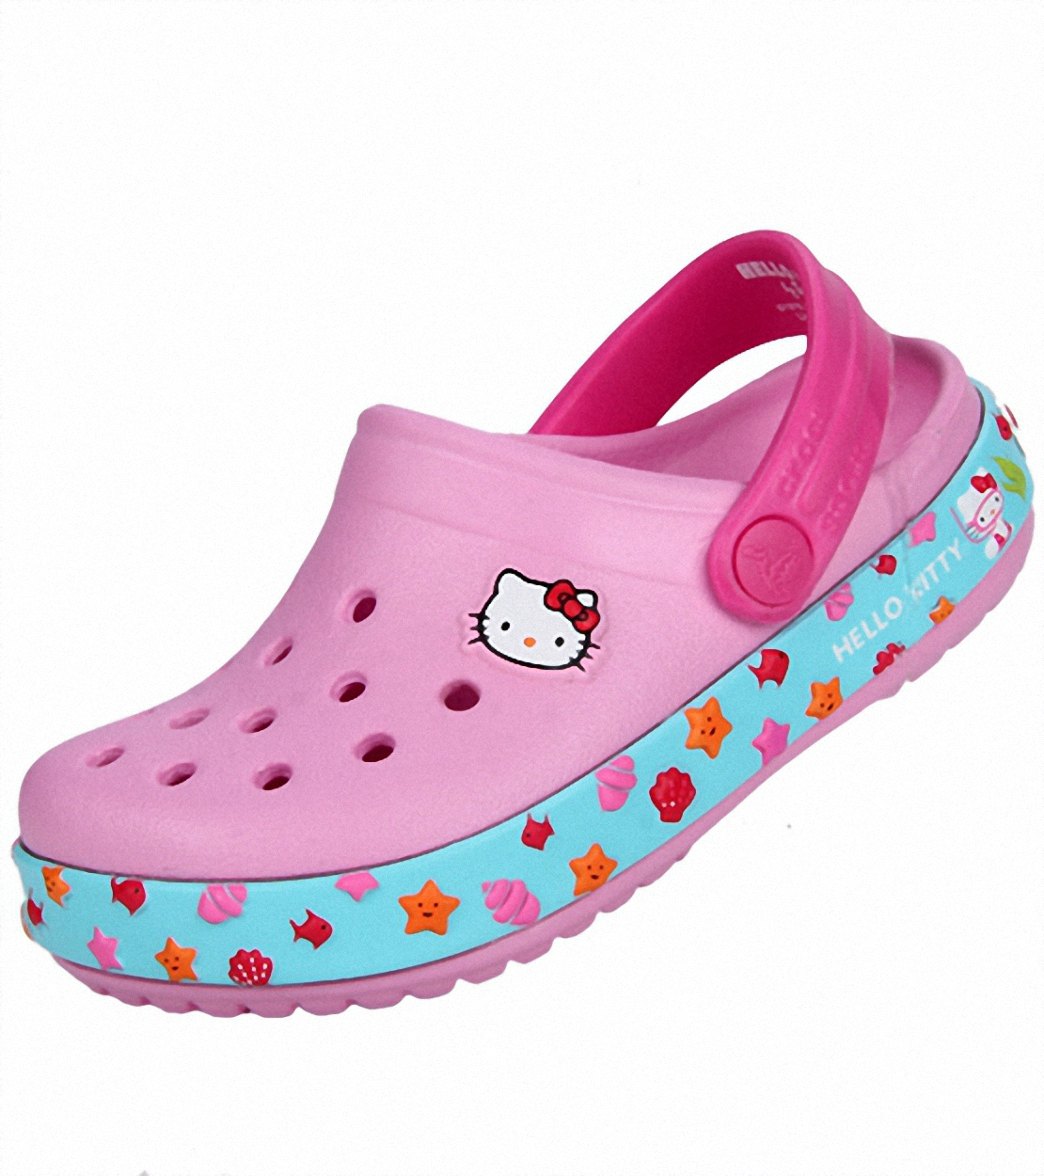  Crocs  Girls Hello  Kitty  Clogs at SwimOutlet com